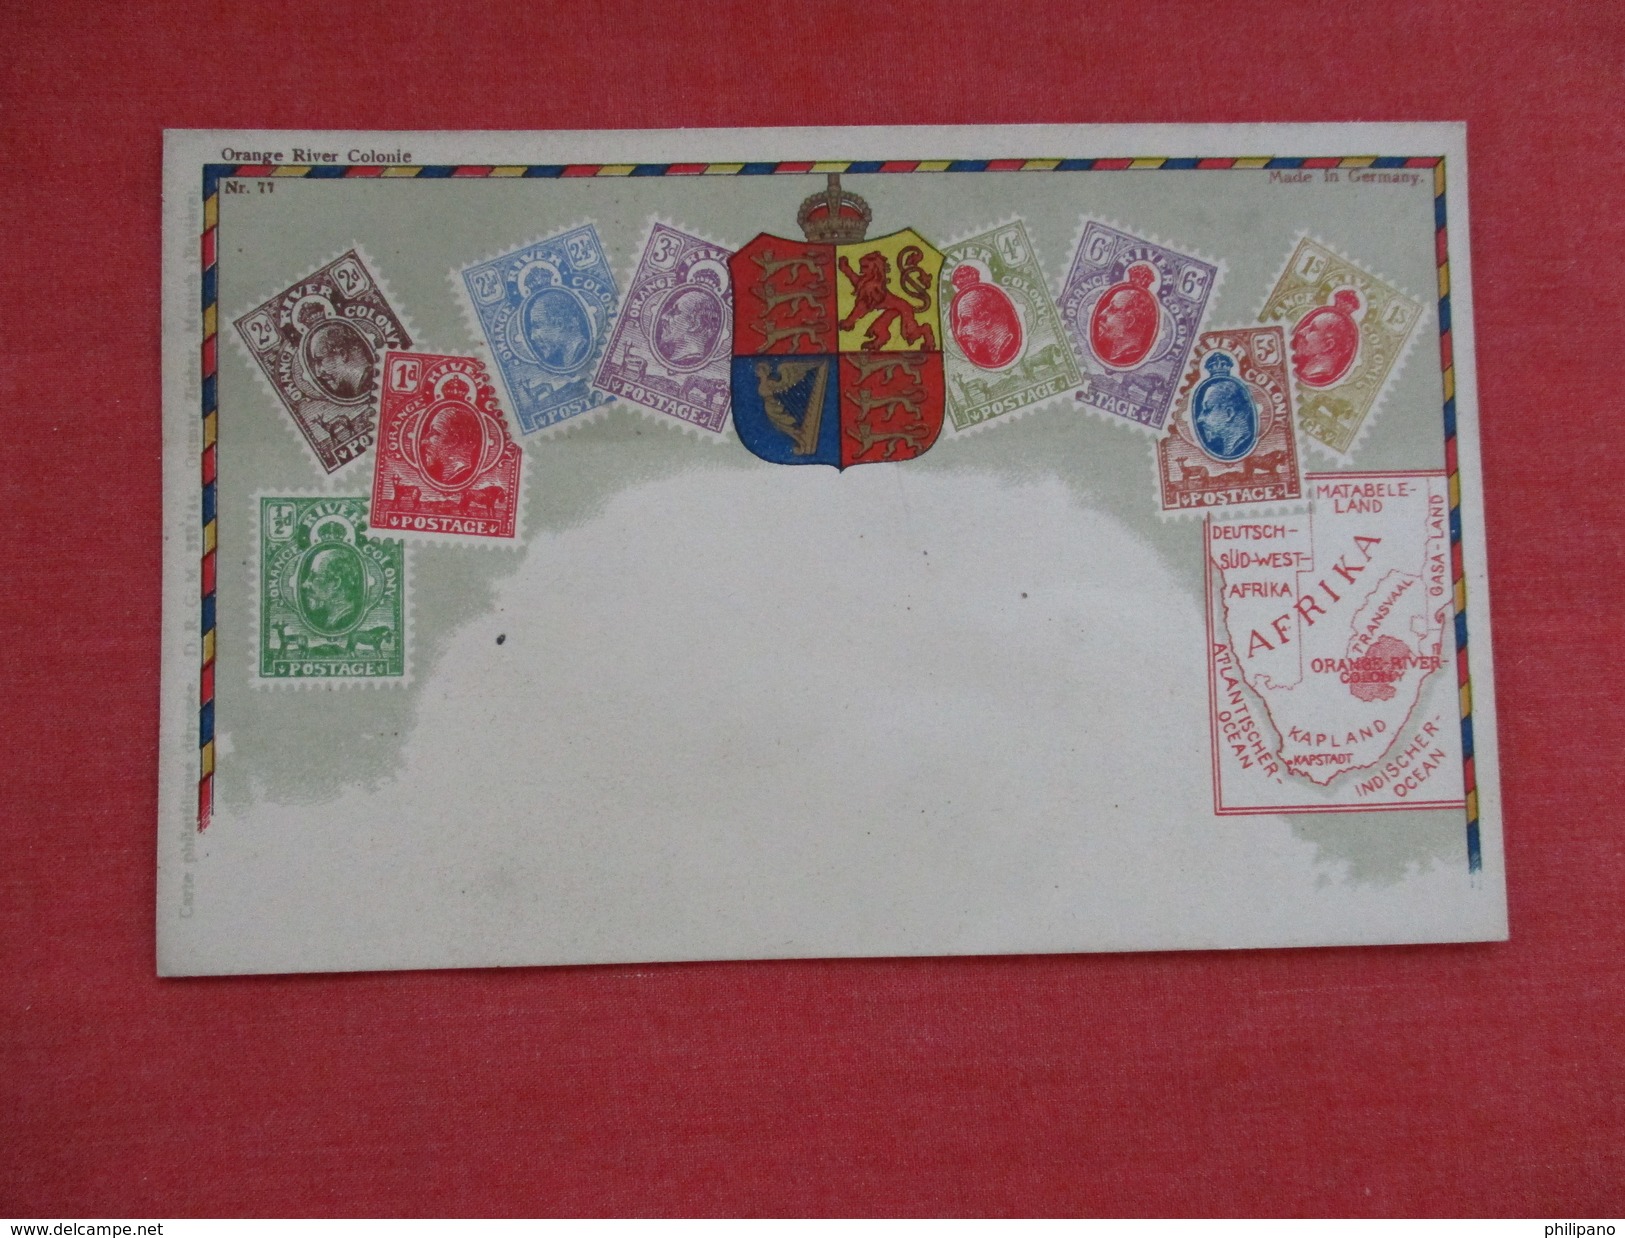 Orange River Colonie  Stamps -- Paper Residue Back     Ref 2765 - Timbres (représentations)